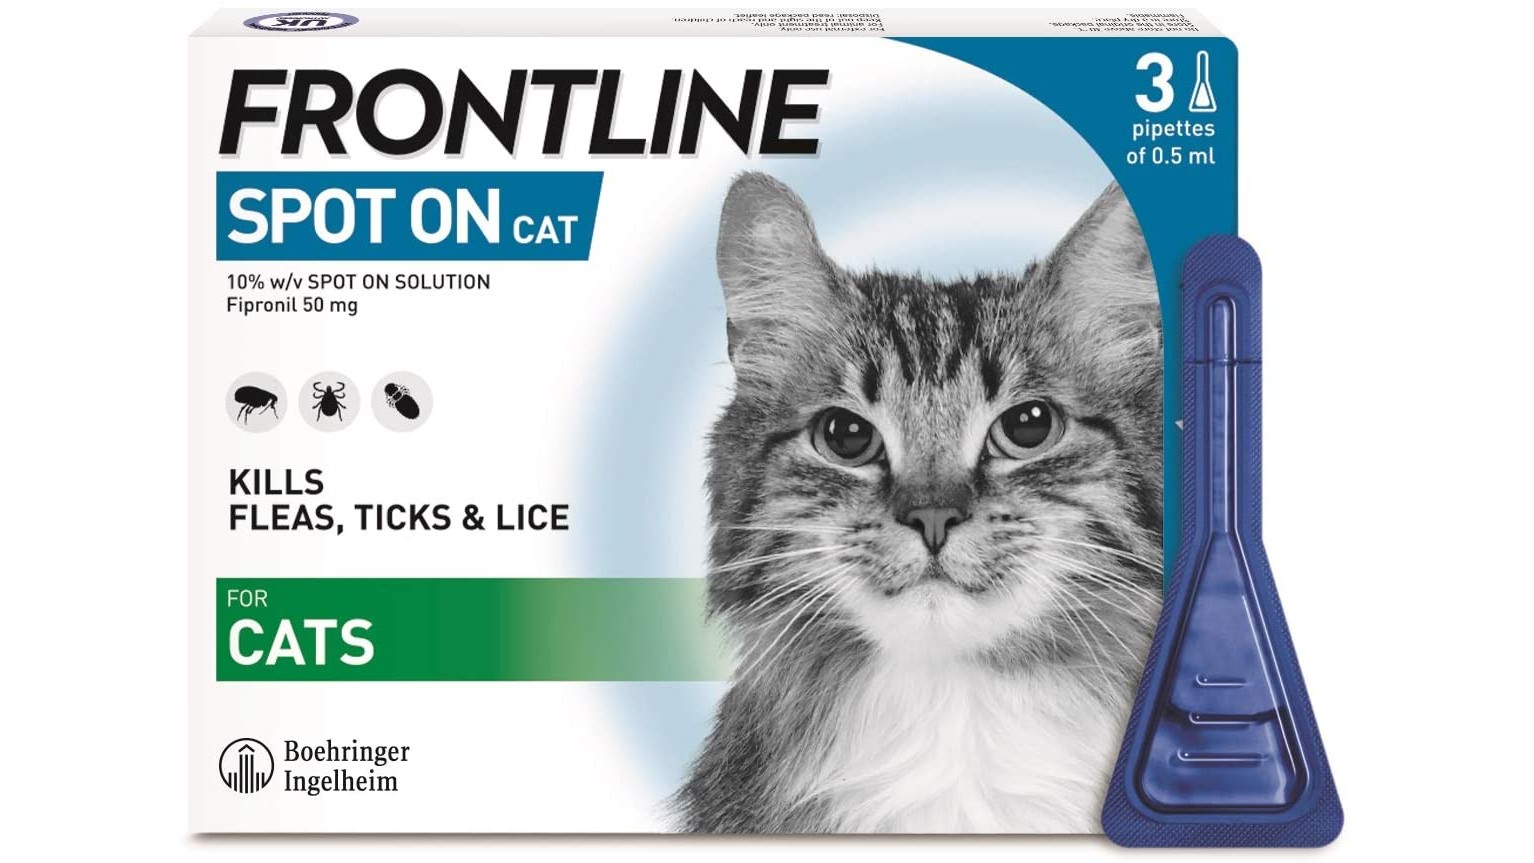 Frontline Spot On Flea & Tick Treatment for Cats review PetsRadar